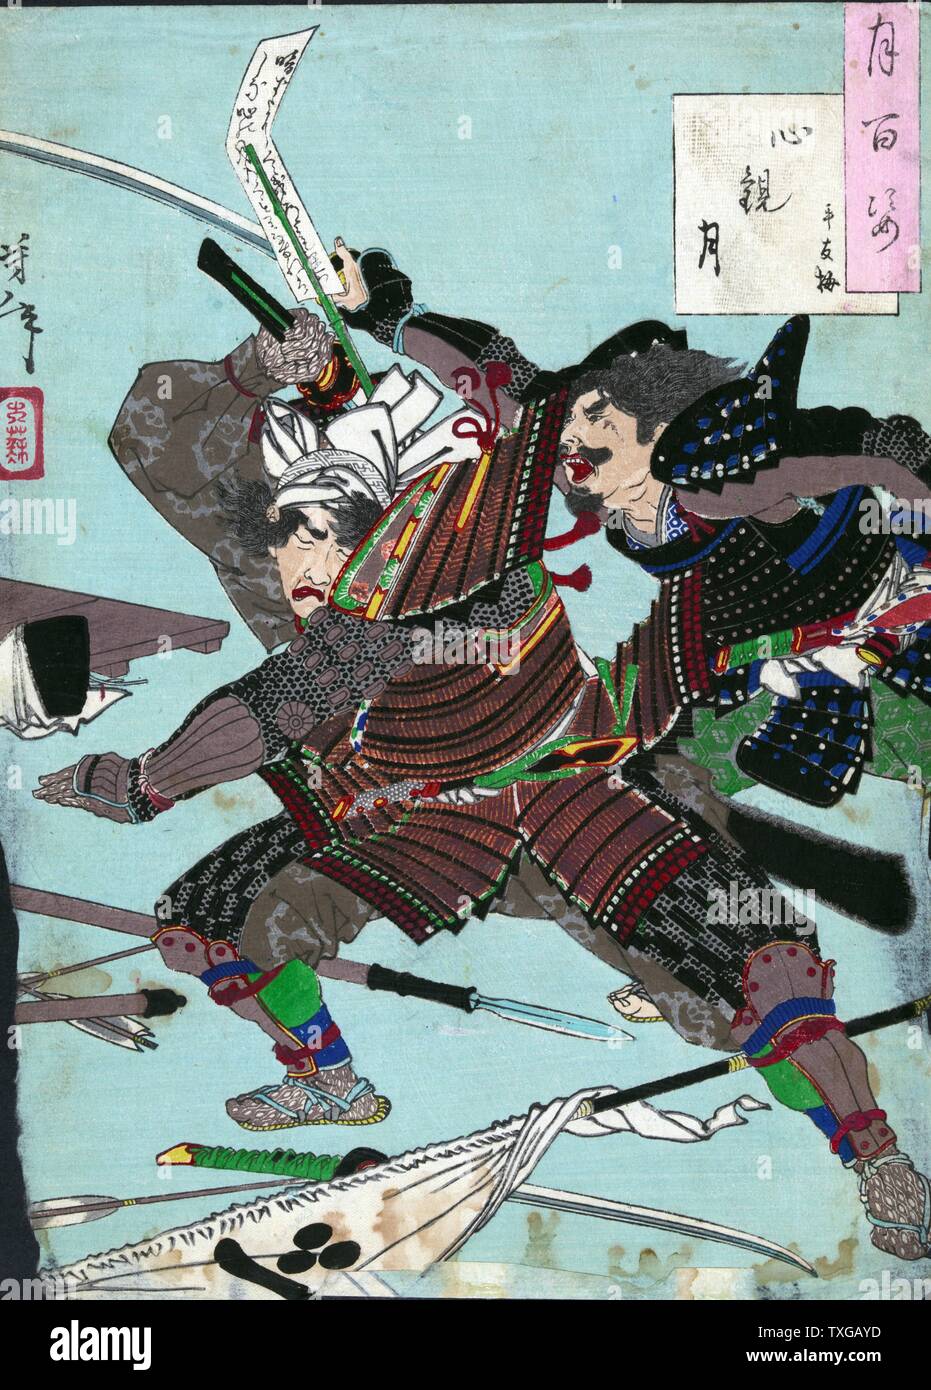 Moon viewed through the heart. Print shows two samurai warriors fighting among fallen weapons. Stock Photo